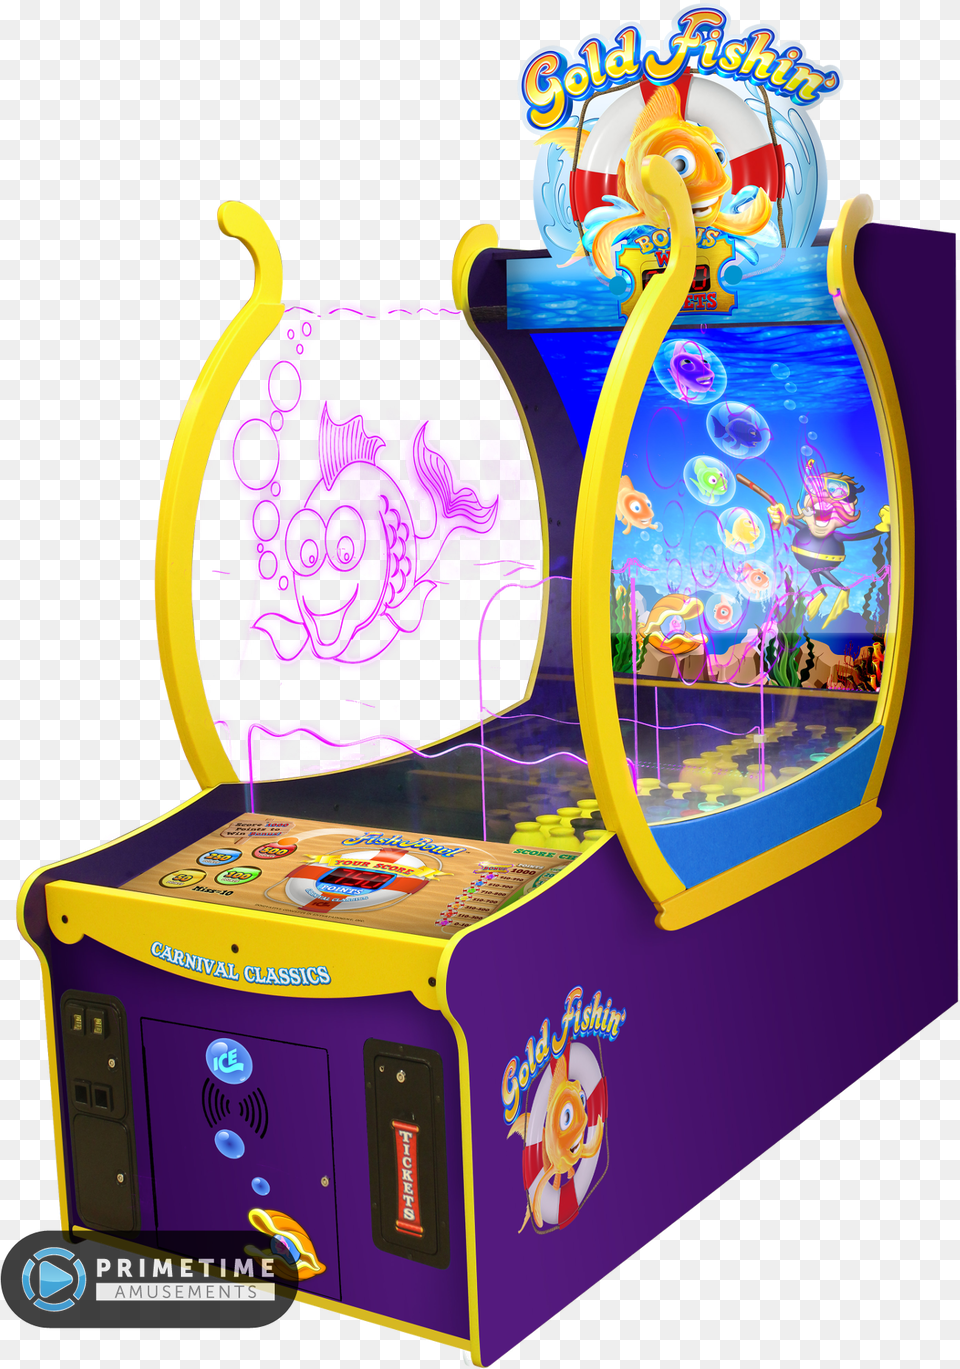 Gold Fishin Gold Fishin Arcade Game, Arcade Game Machine Png Image